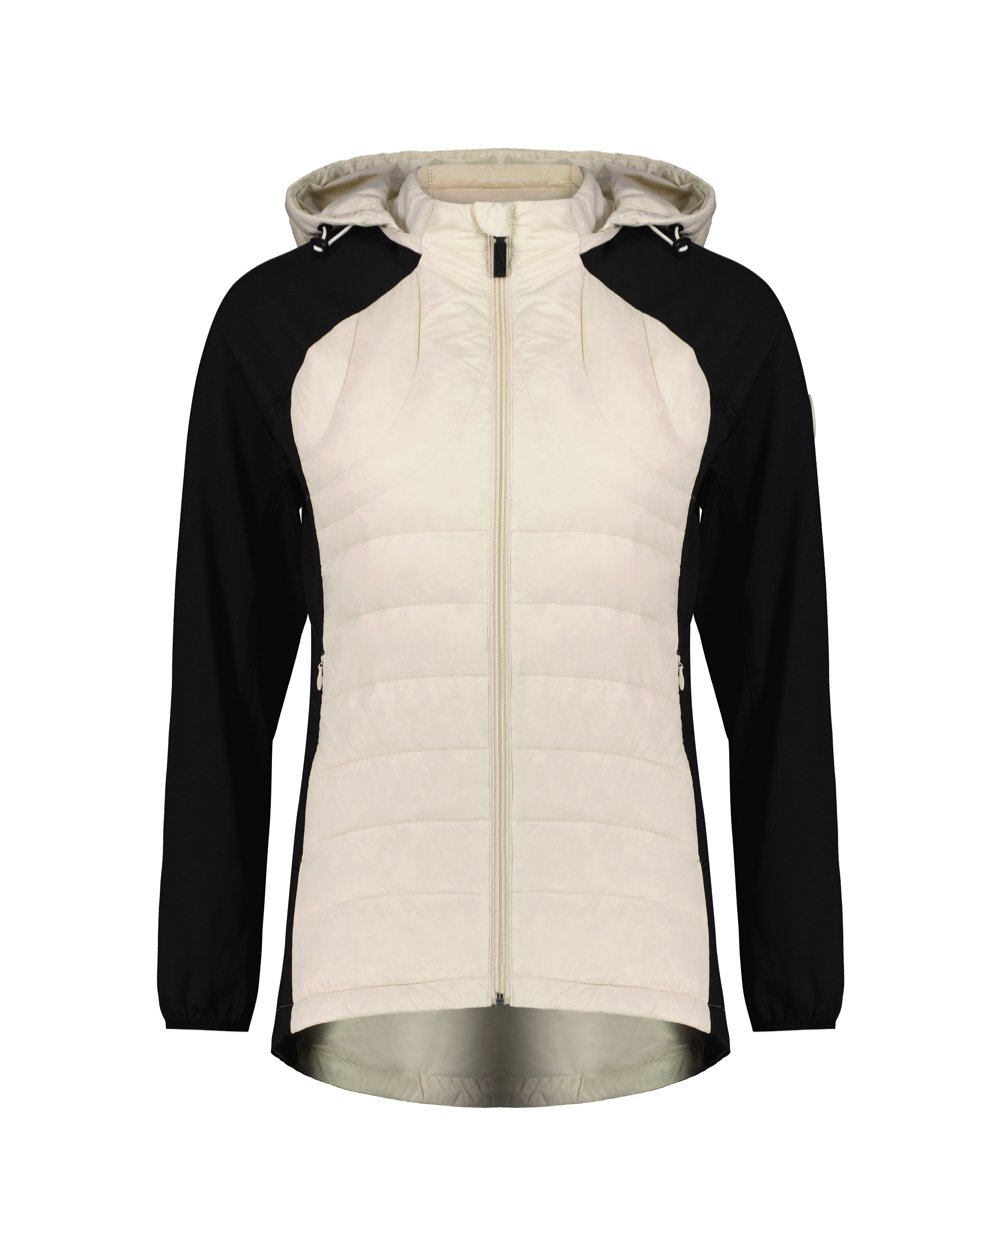 Sienna - Women's Packable Down Jacket